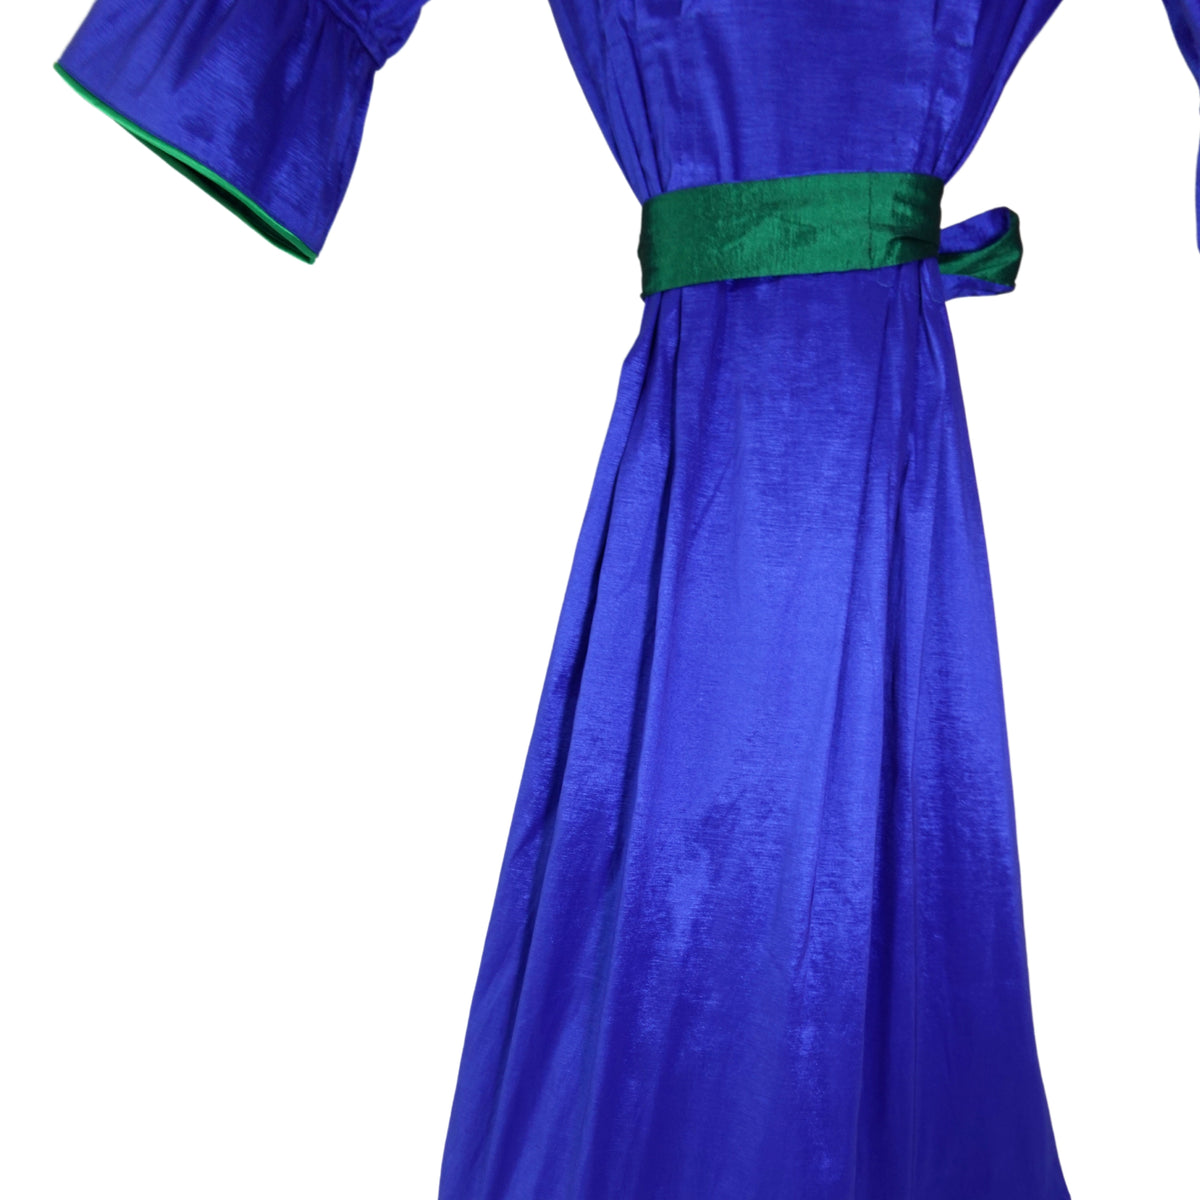 CAROL DRESS IN ROYAL BLUE/GREEN